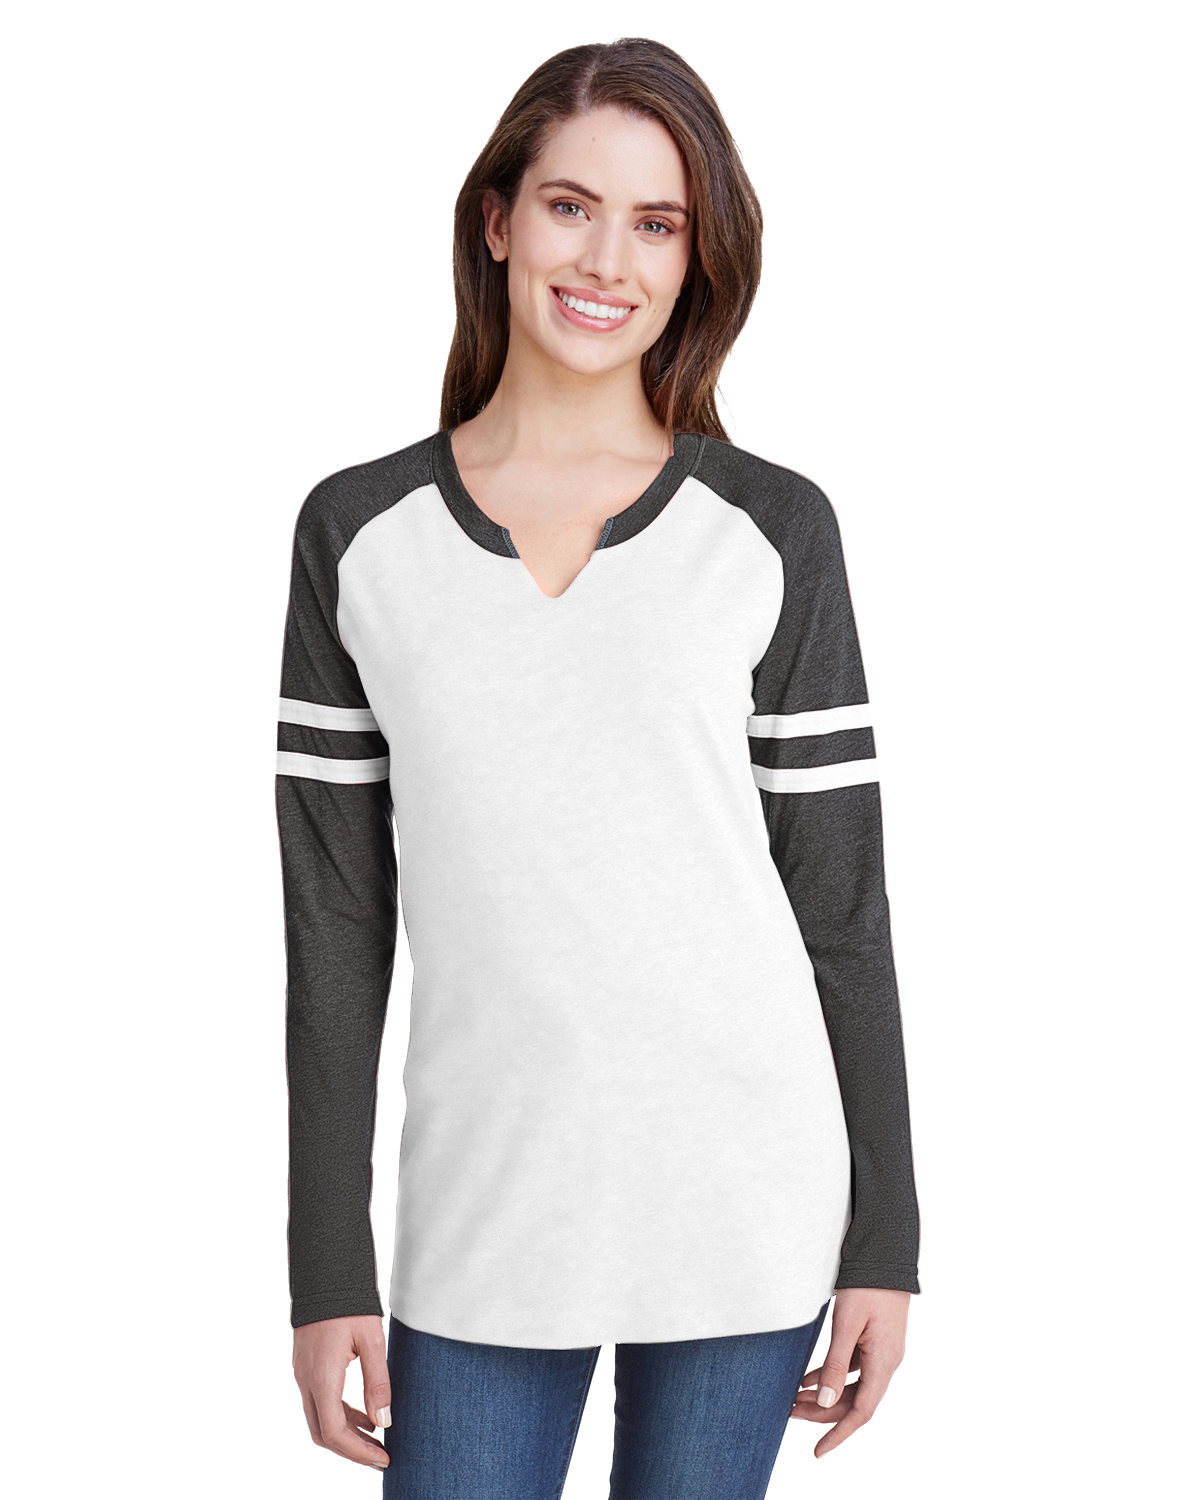 LAT 3534 - Women's Fine Jersey Mash Up Long Sleeve T-Shirt